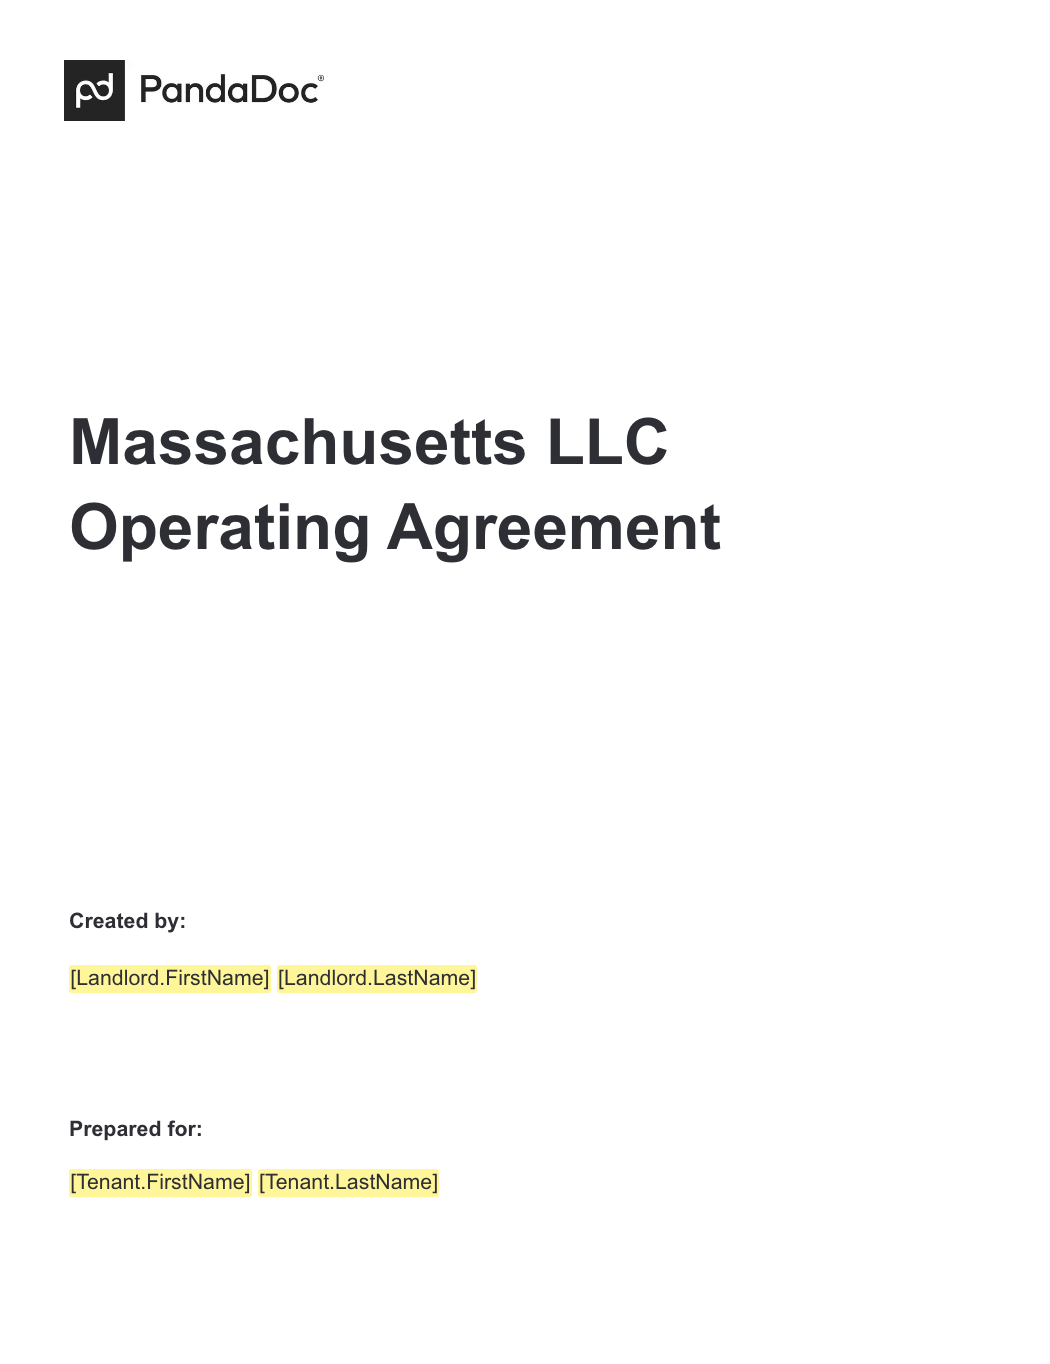 Massachusetts LLC Operating Agreement 